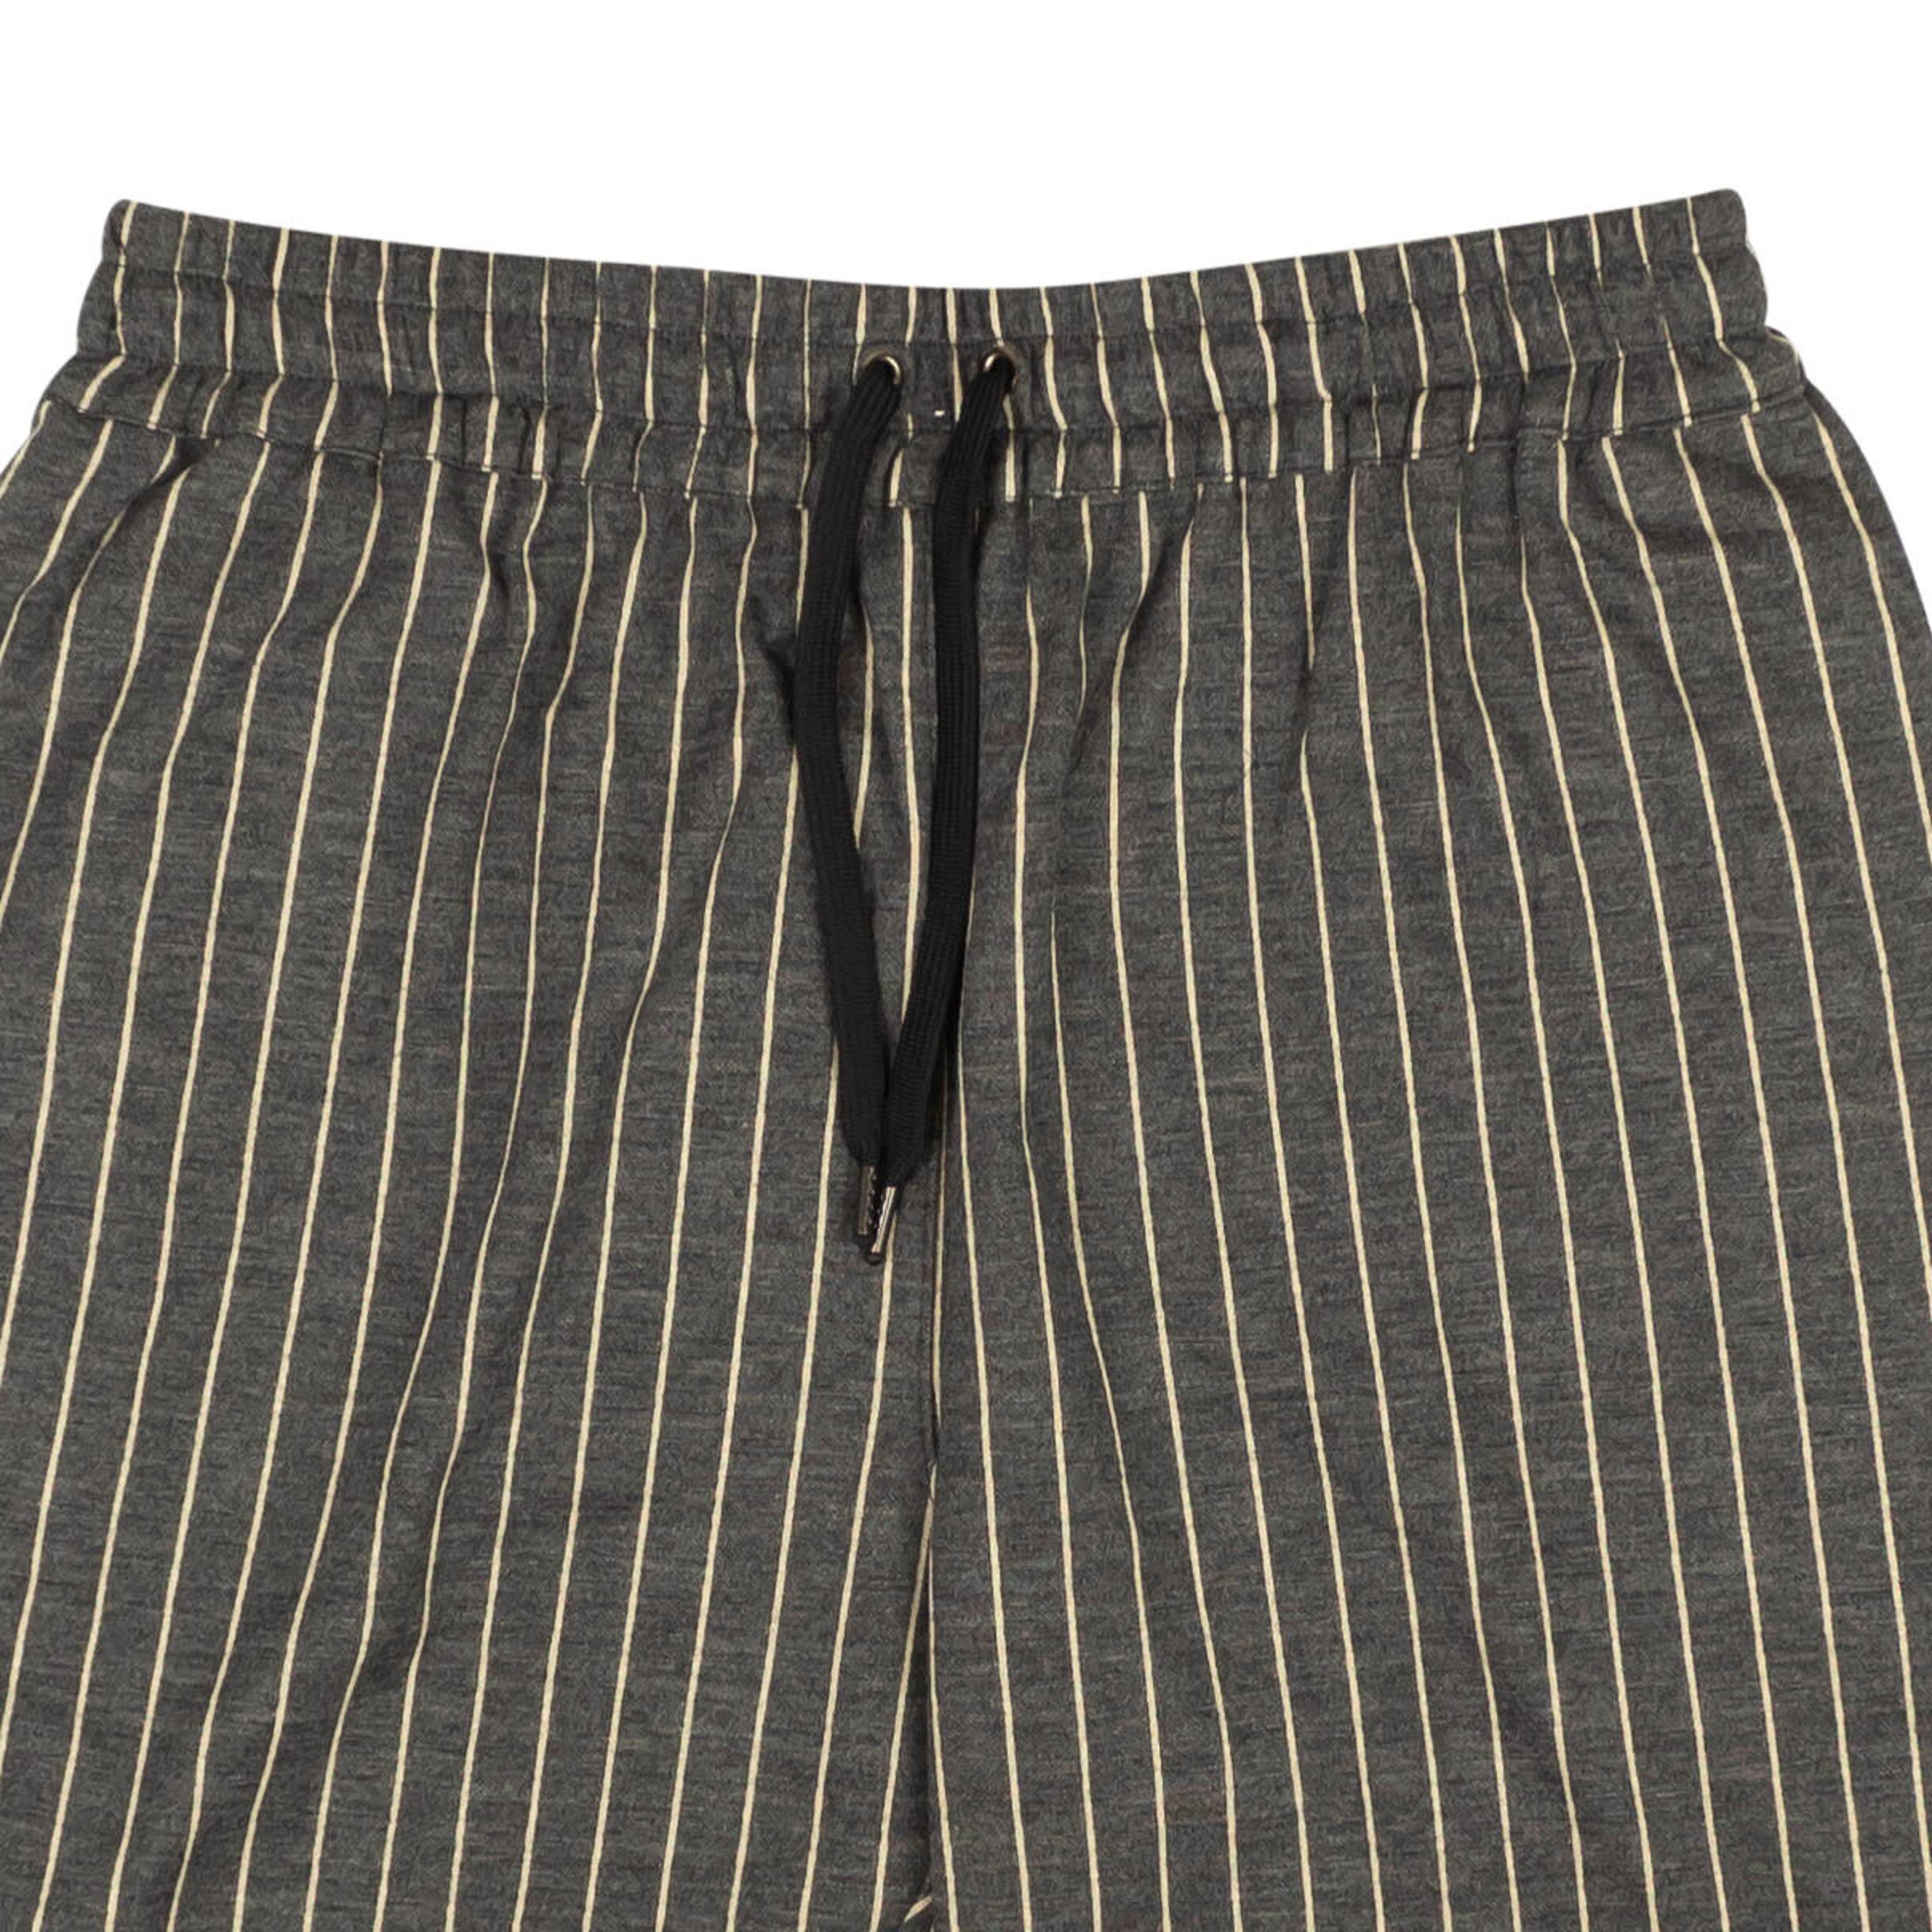 Alternate View 1 of Grey White Pinstripe Wool Blend Shorts